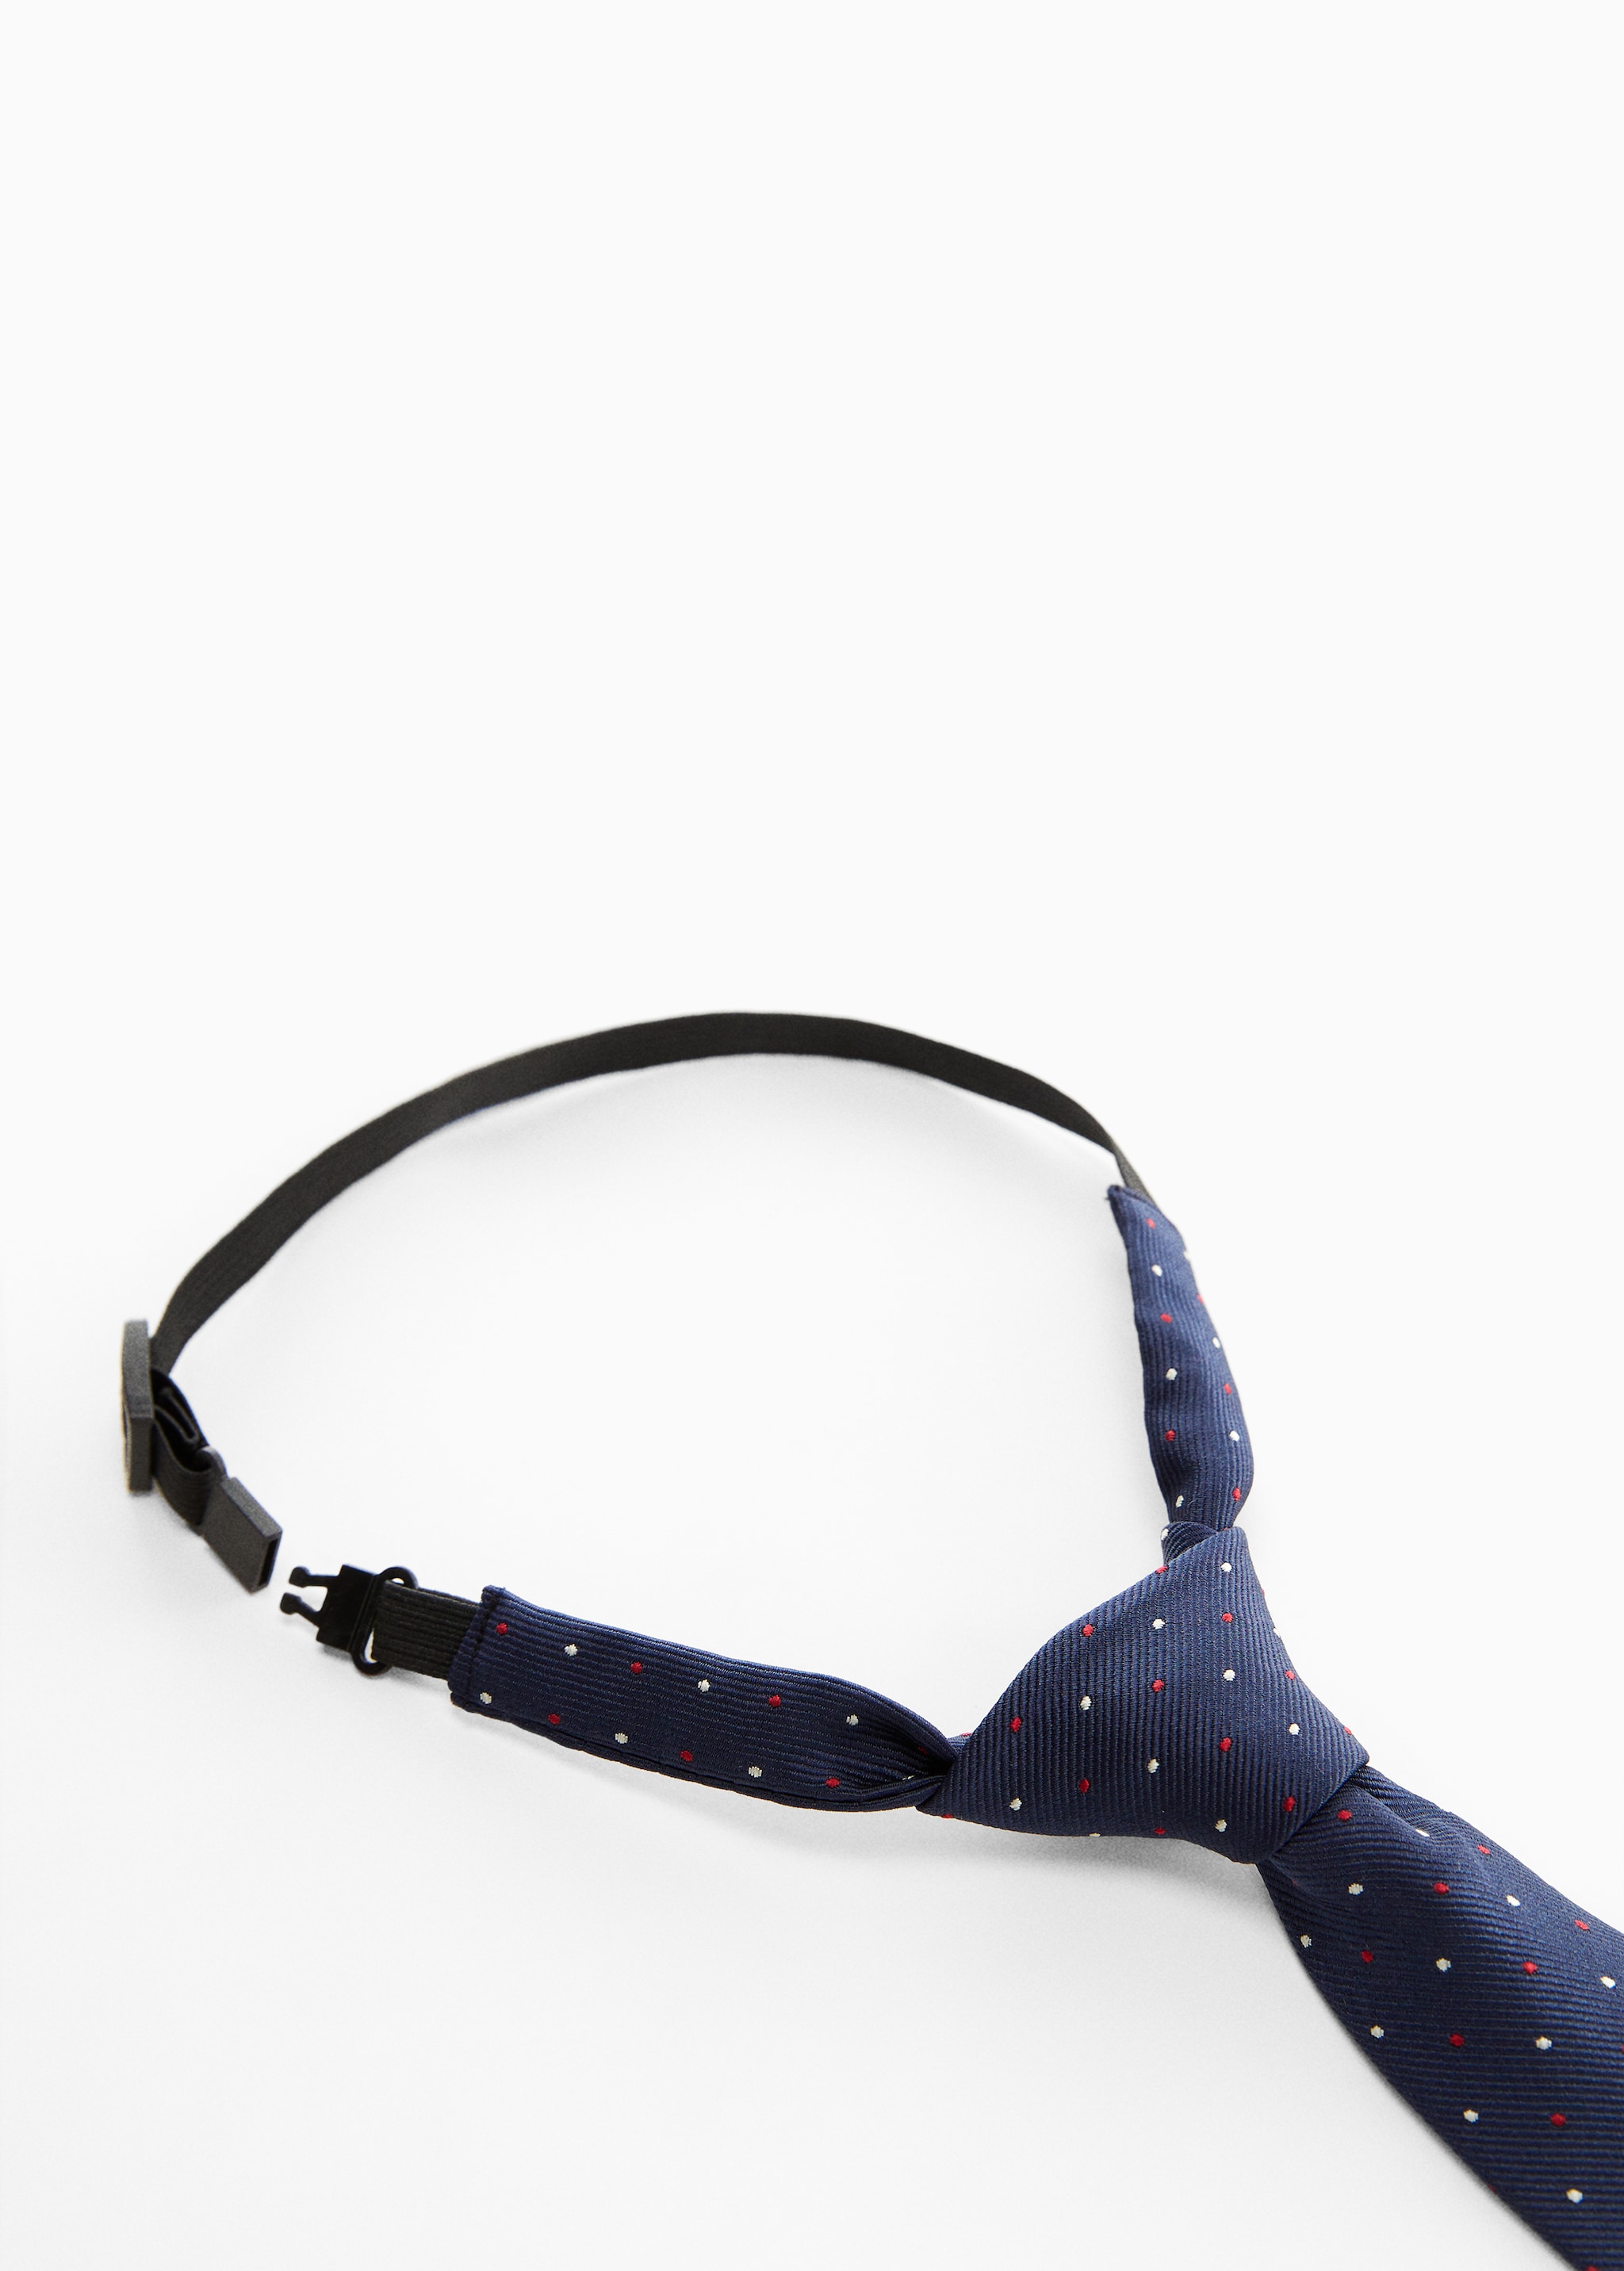 Tie with polka-dot print  - Medium plane